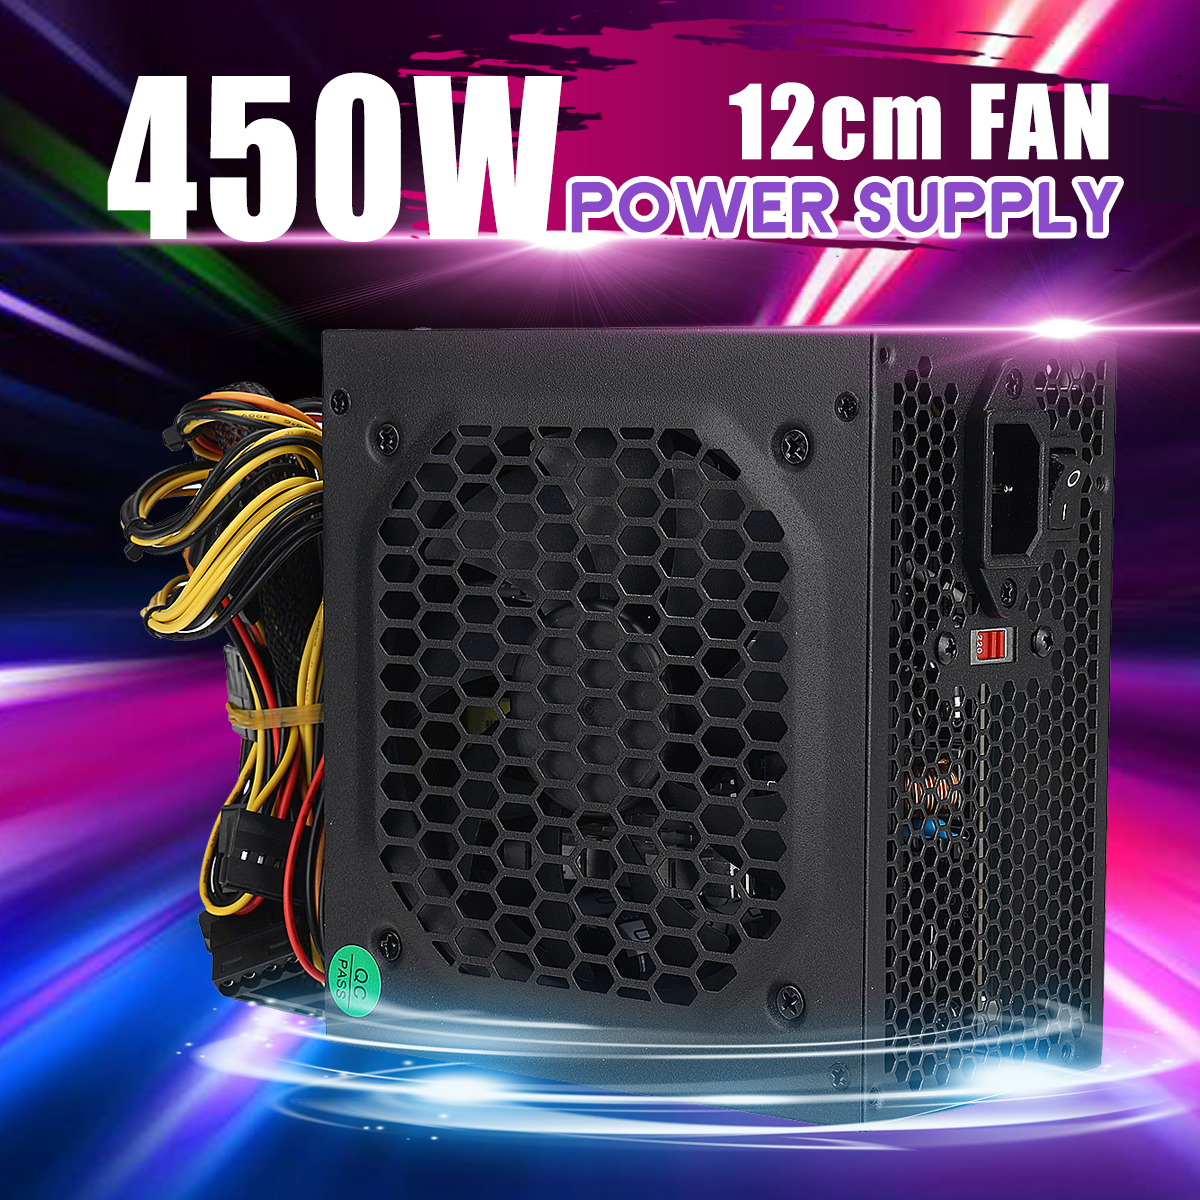 450W-Power-Supply-12cm-Fan-8-Pin-PCI-SATA-12V-Computer-Power-Supply-1664872-1